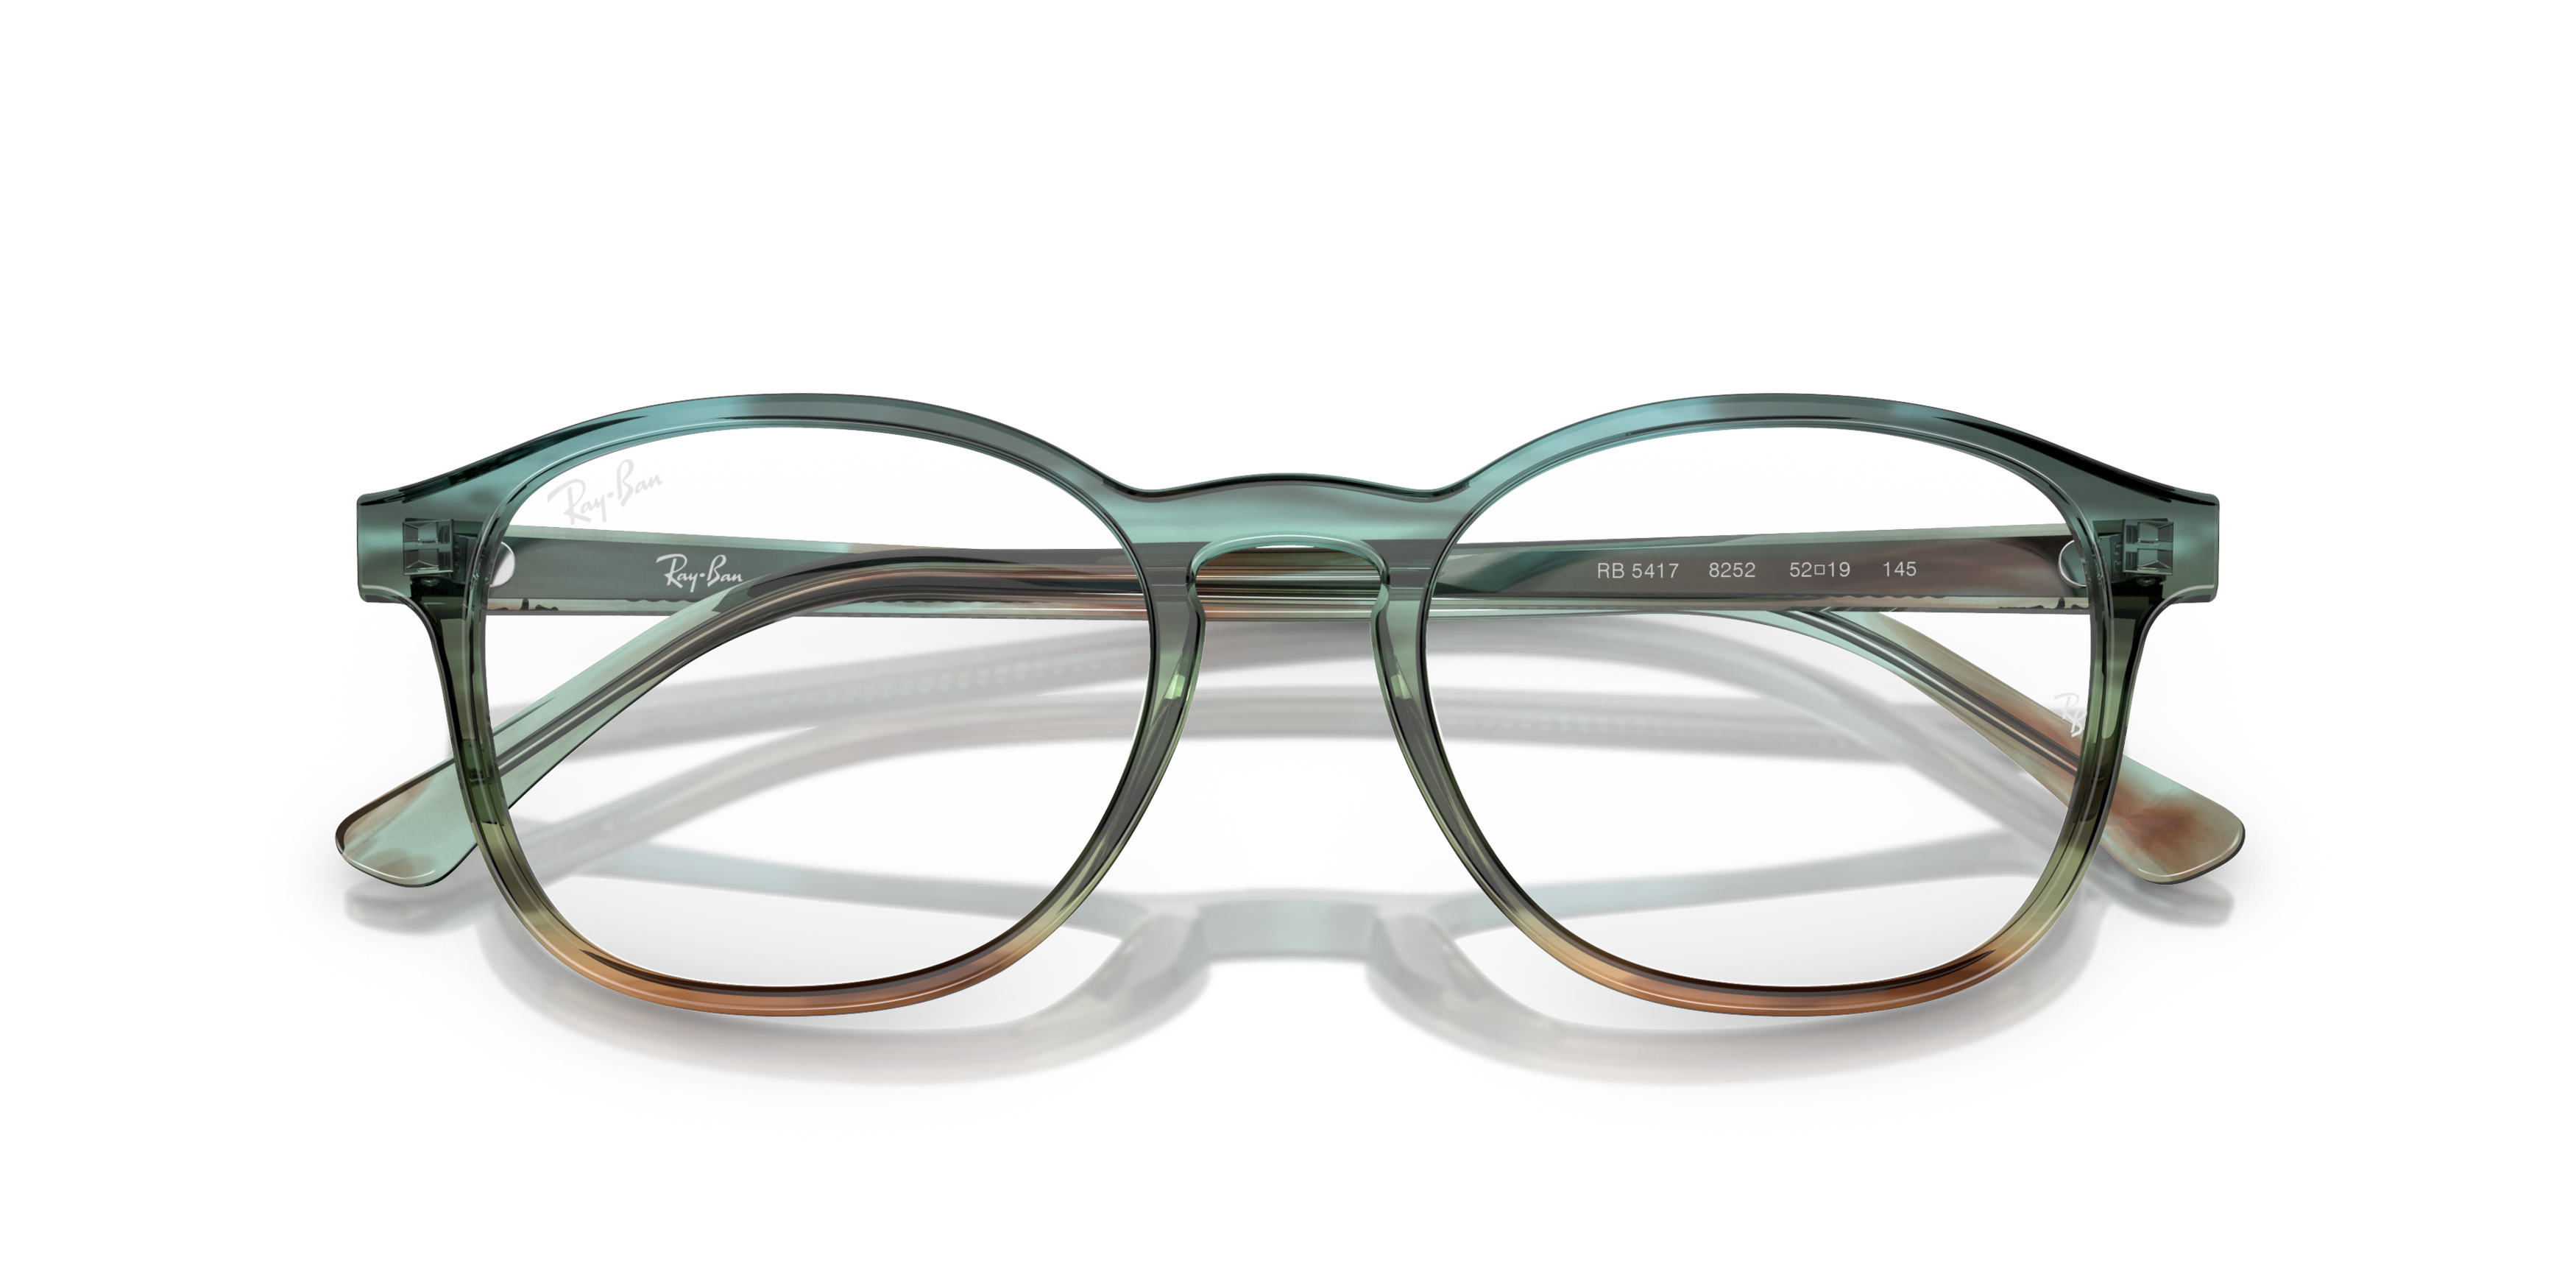 Folded Ray-Ban RX 5417 (8252) Glasses Transparent / Blue